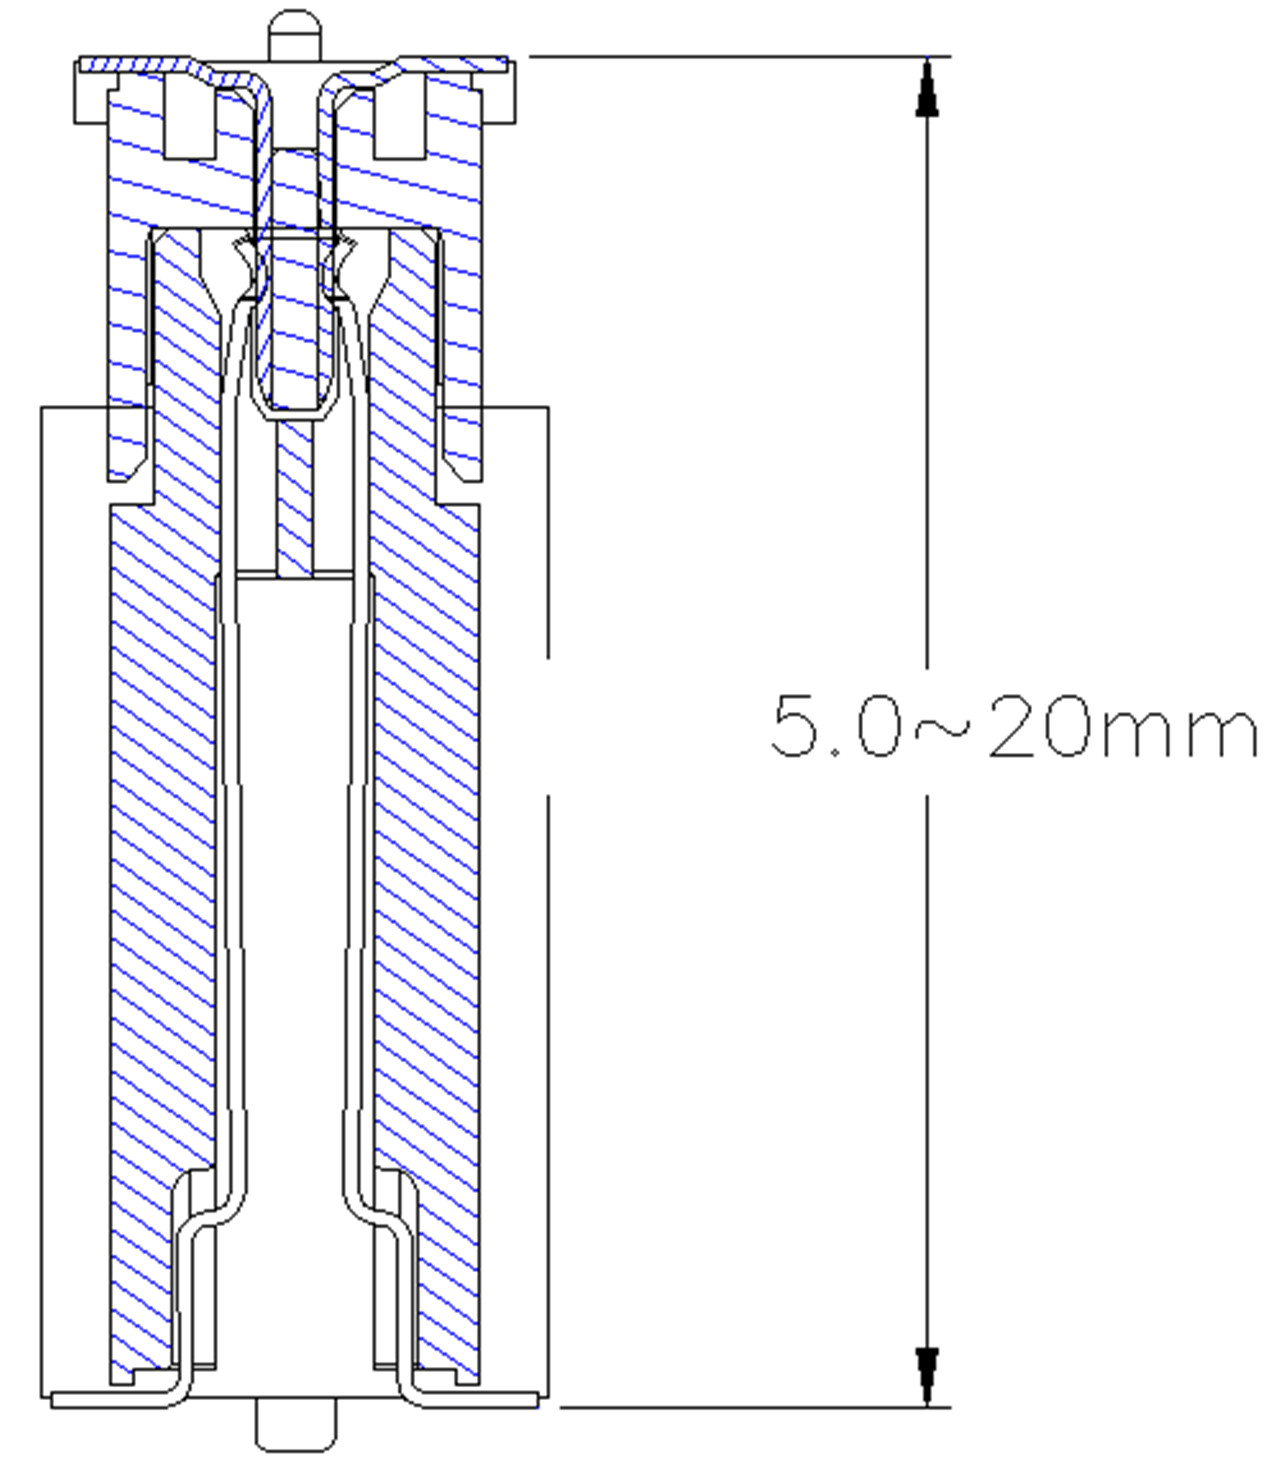 Conector placa a placa de 0,8 mm - 6,7 mm de altura macho (7)